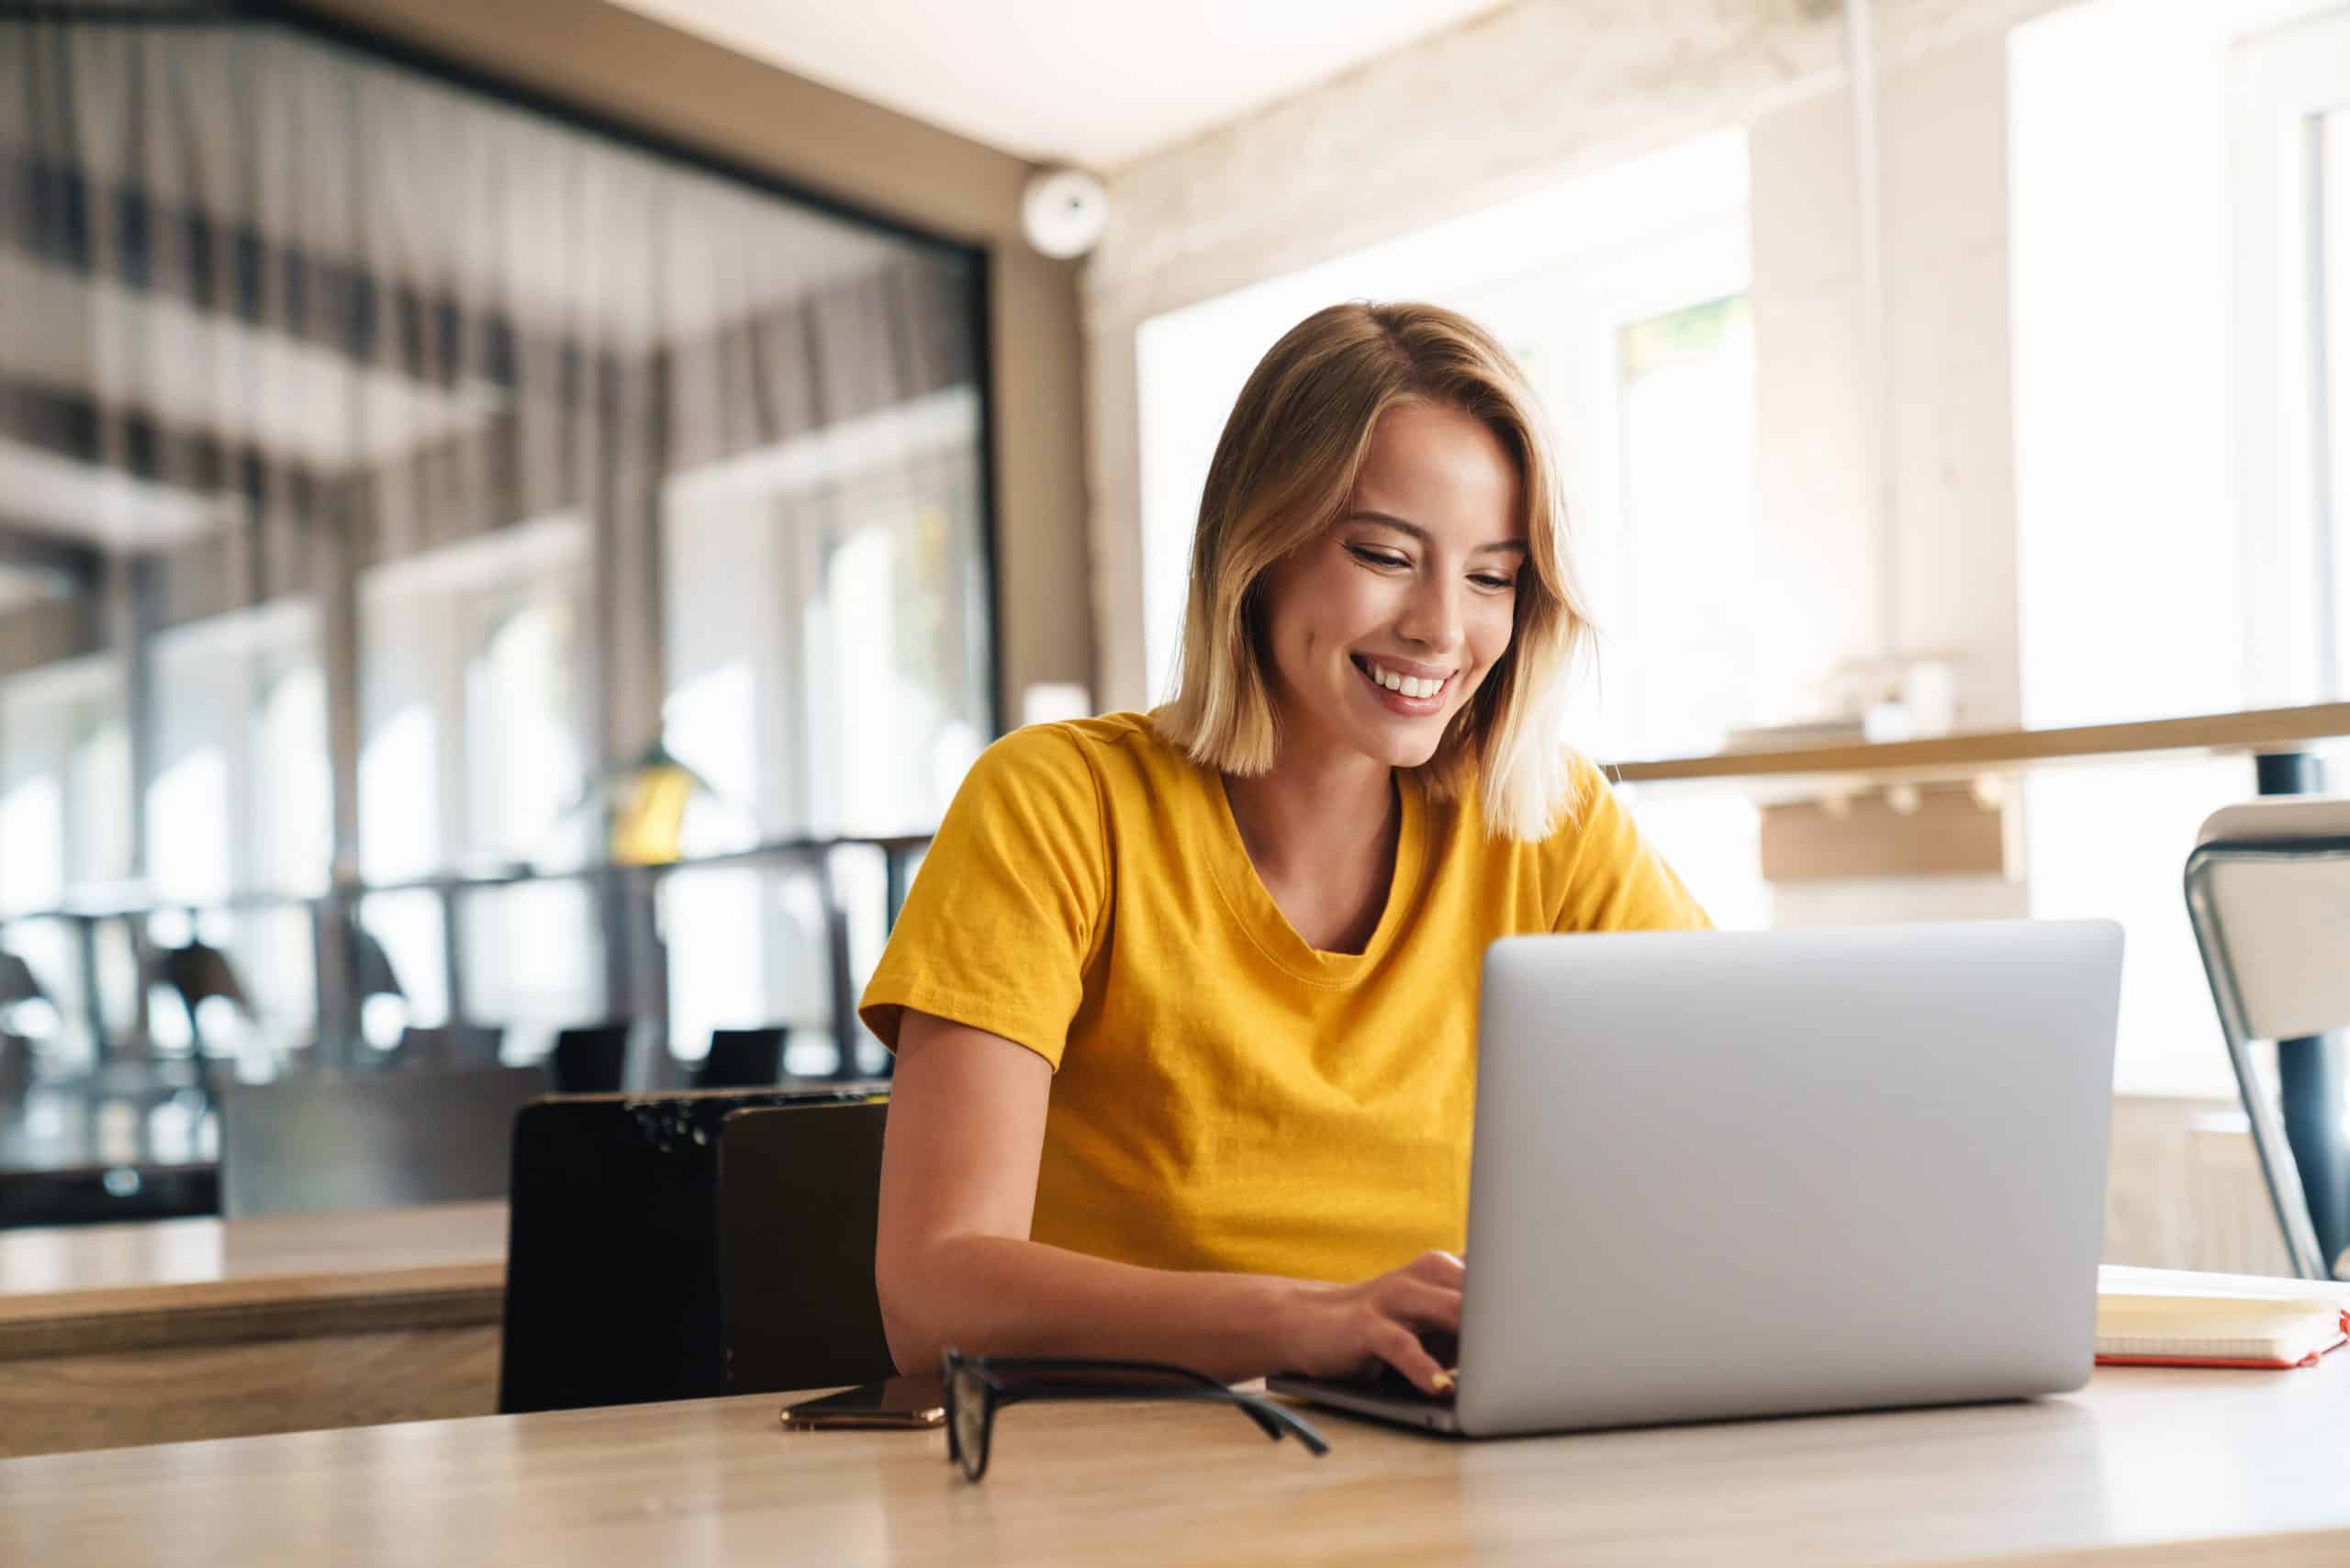 Photo of joyful nice woman using laptop and smiling while sittin